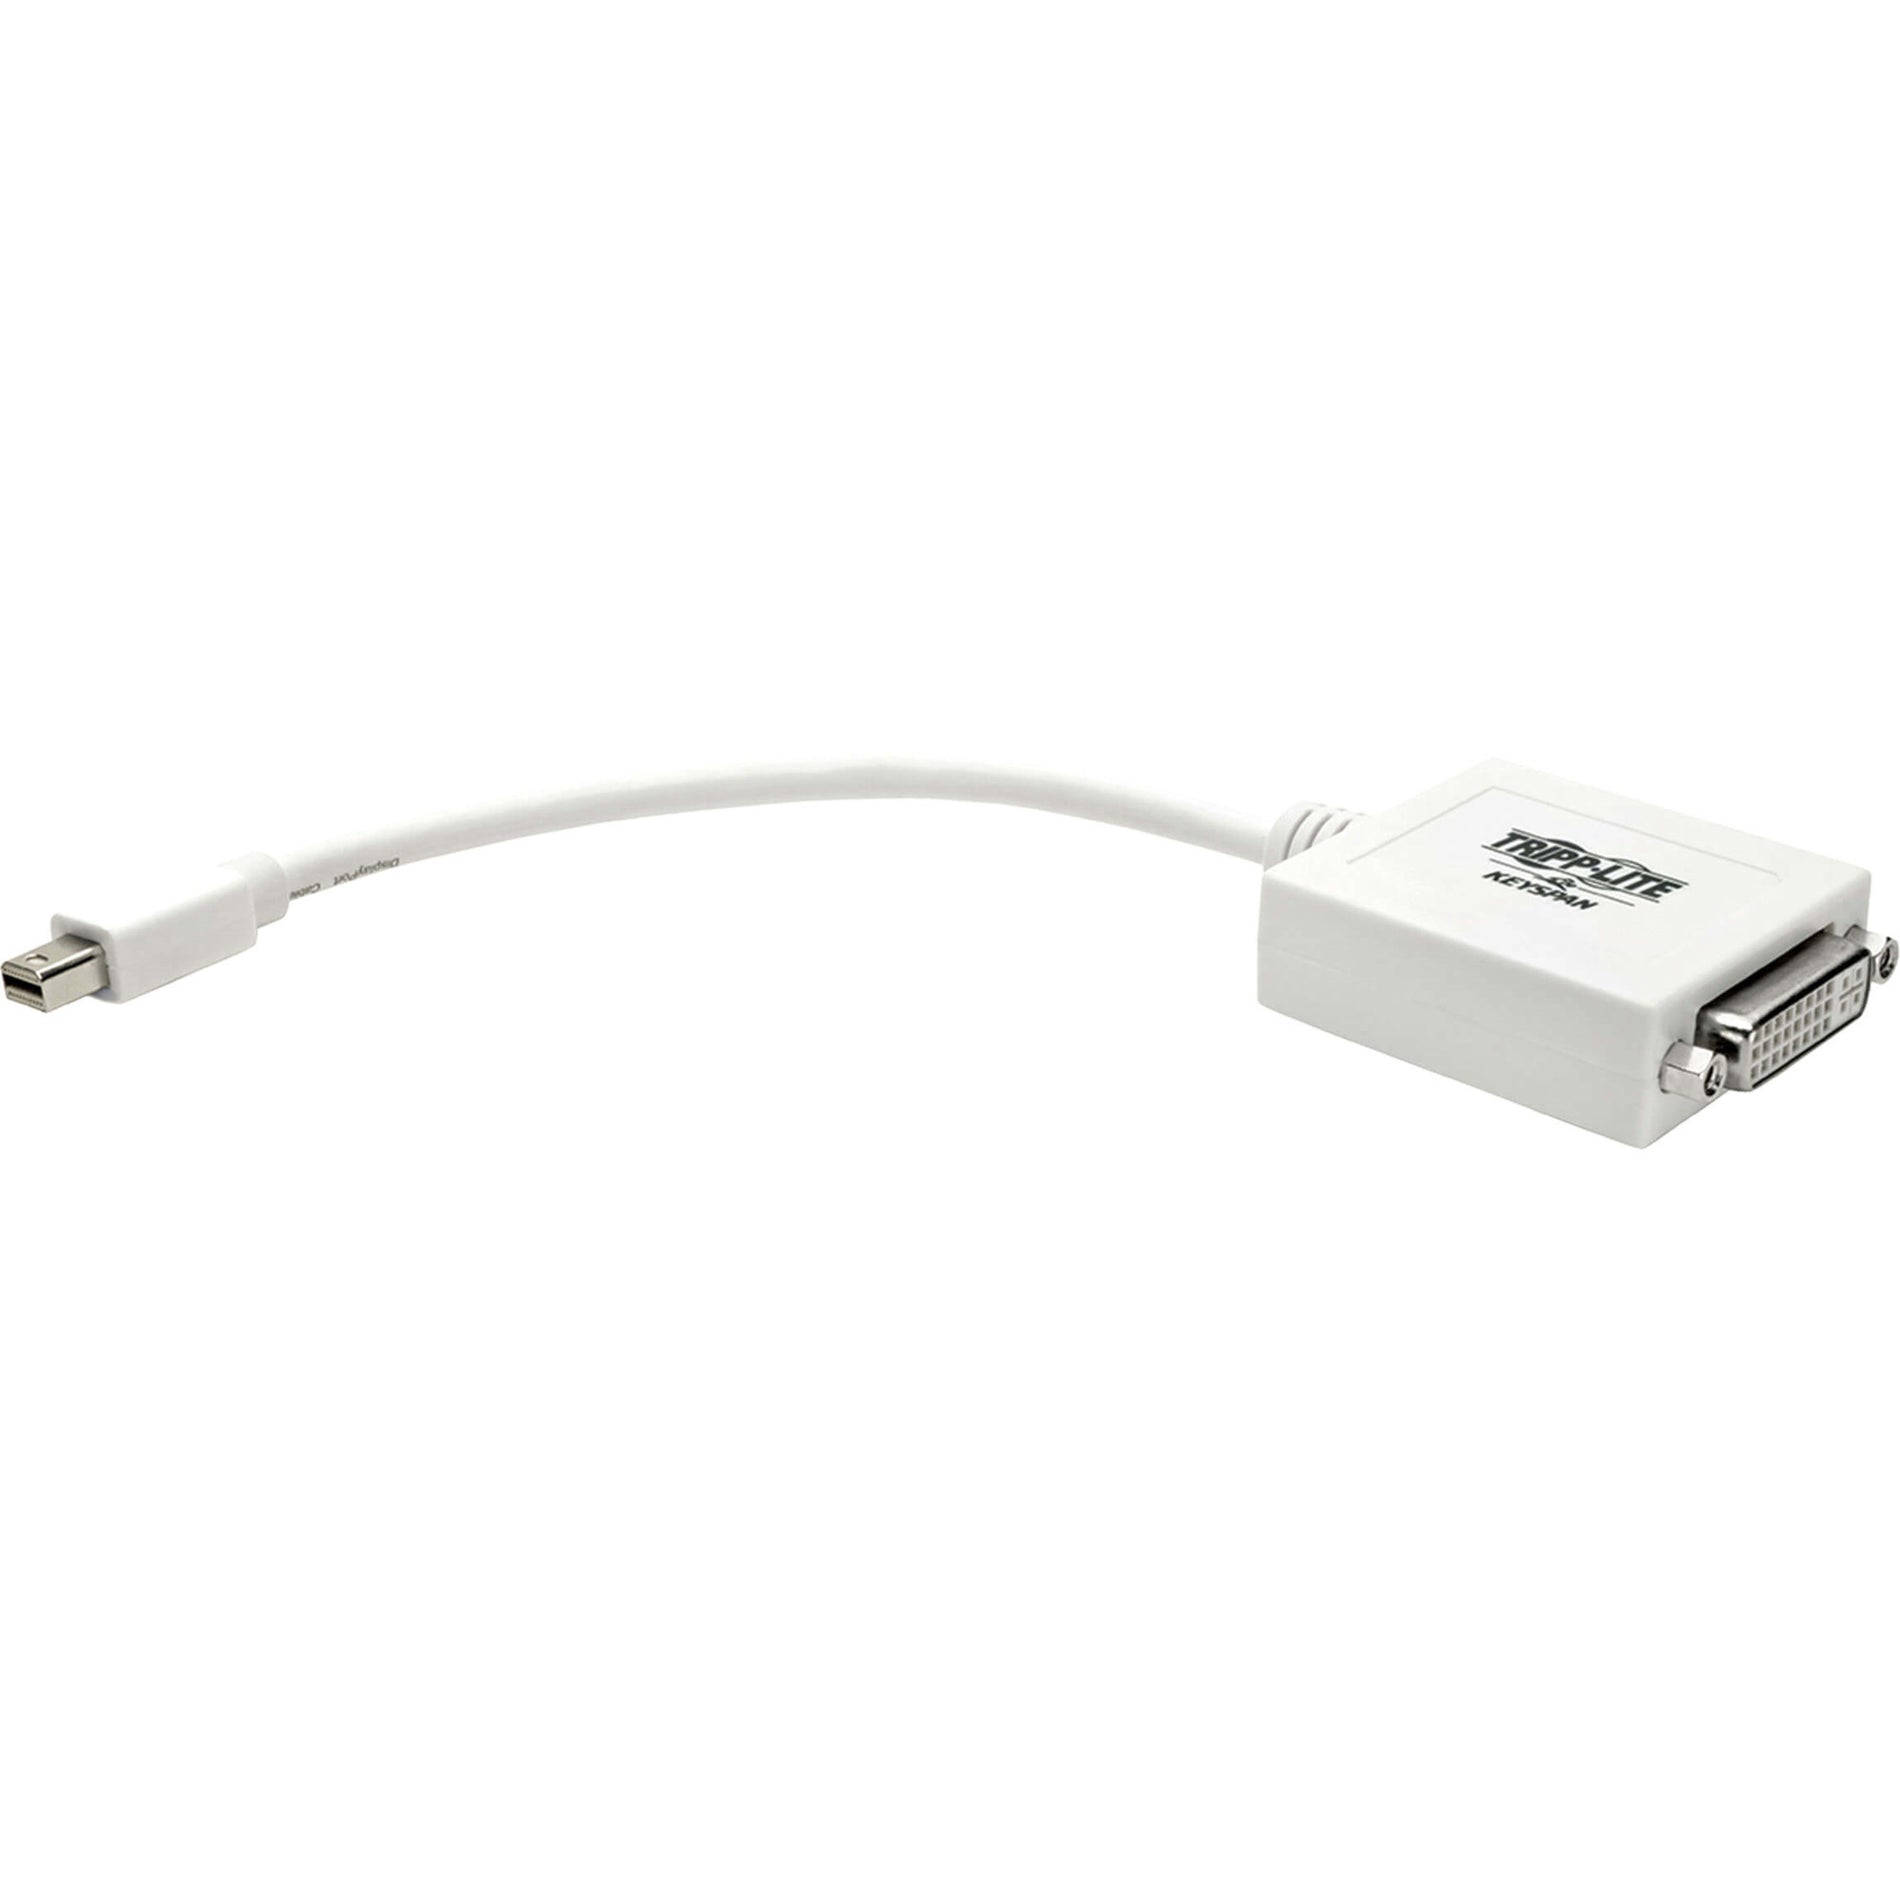 Keyspan P137-06N-DVI Mini Displayport to DVI Adapter, White - Connect Mac or PC to DVI Monitor